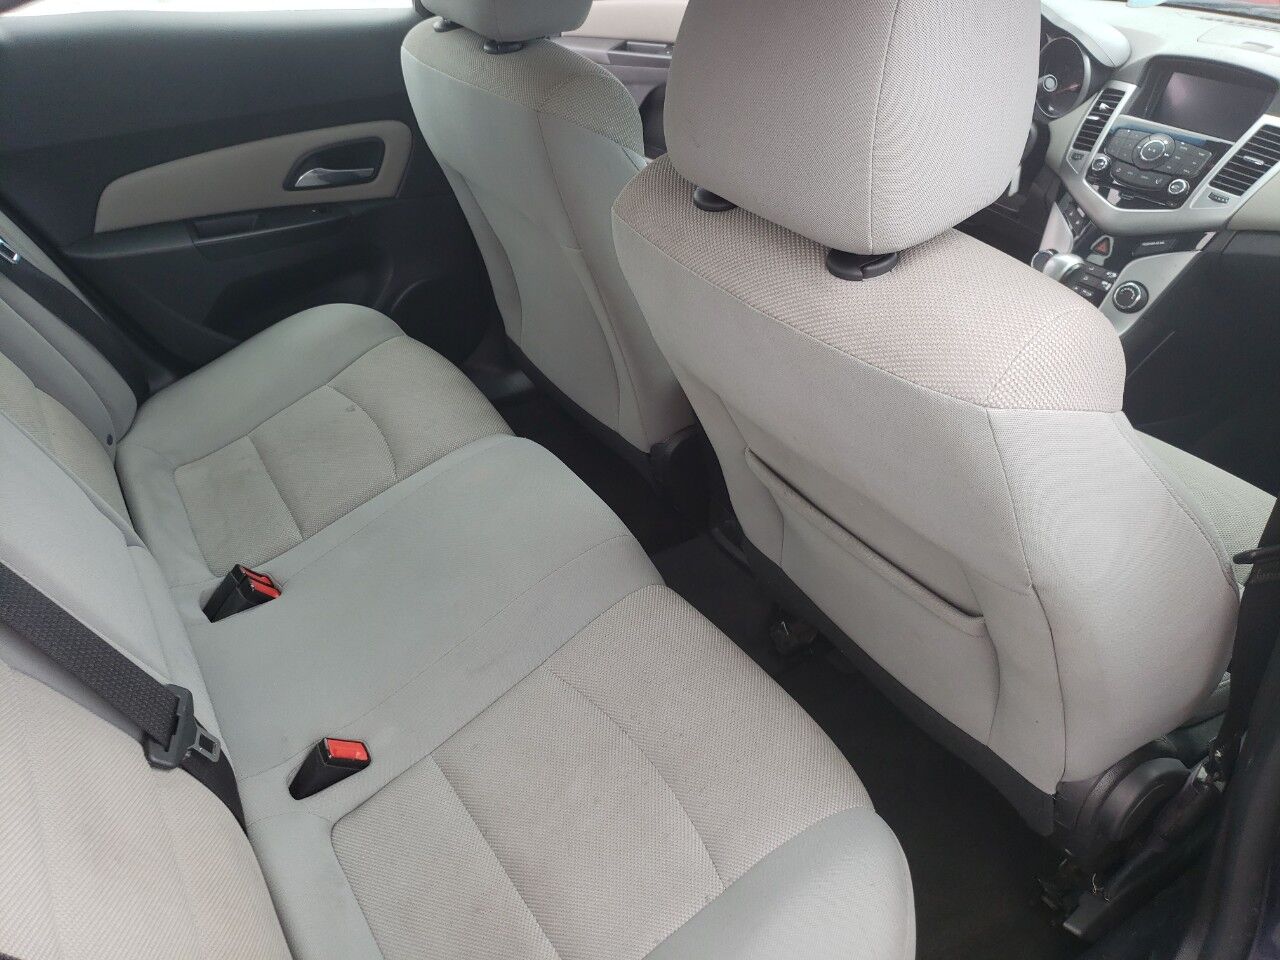 2014 CHEVROLET Cruze Sedan - $4,995